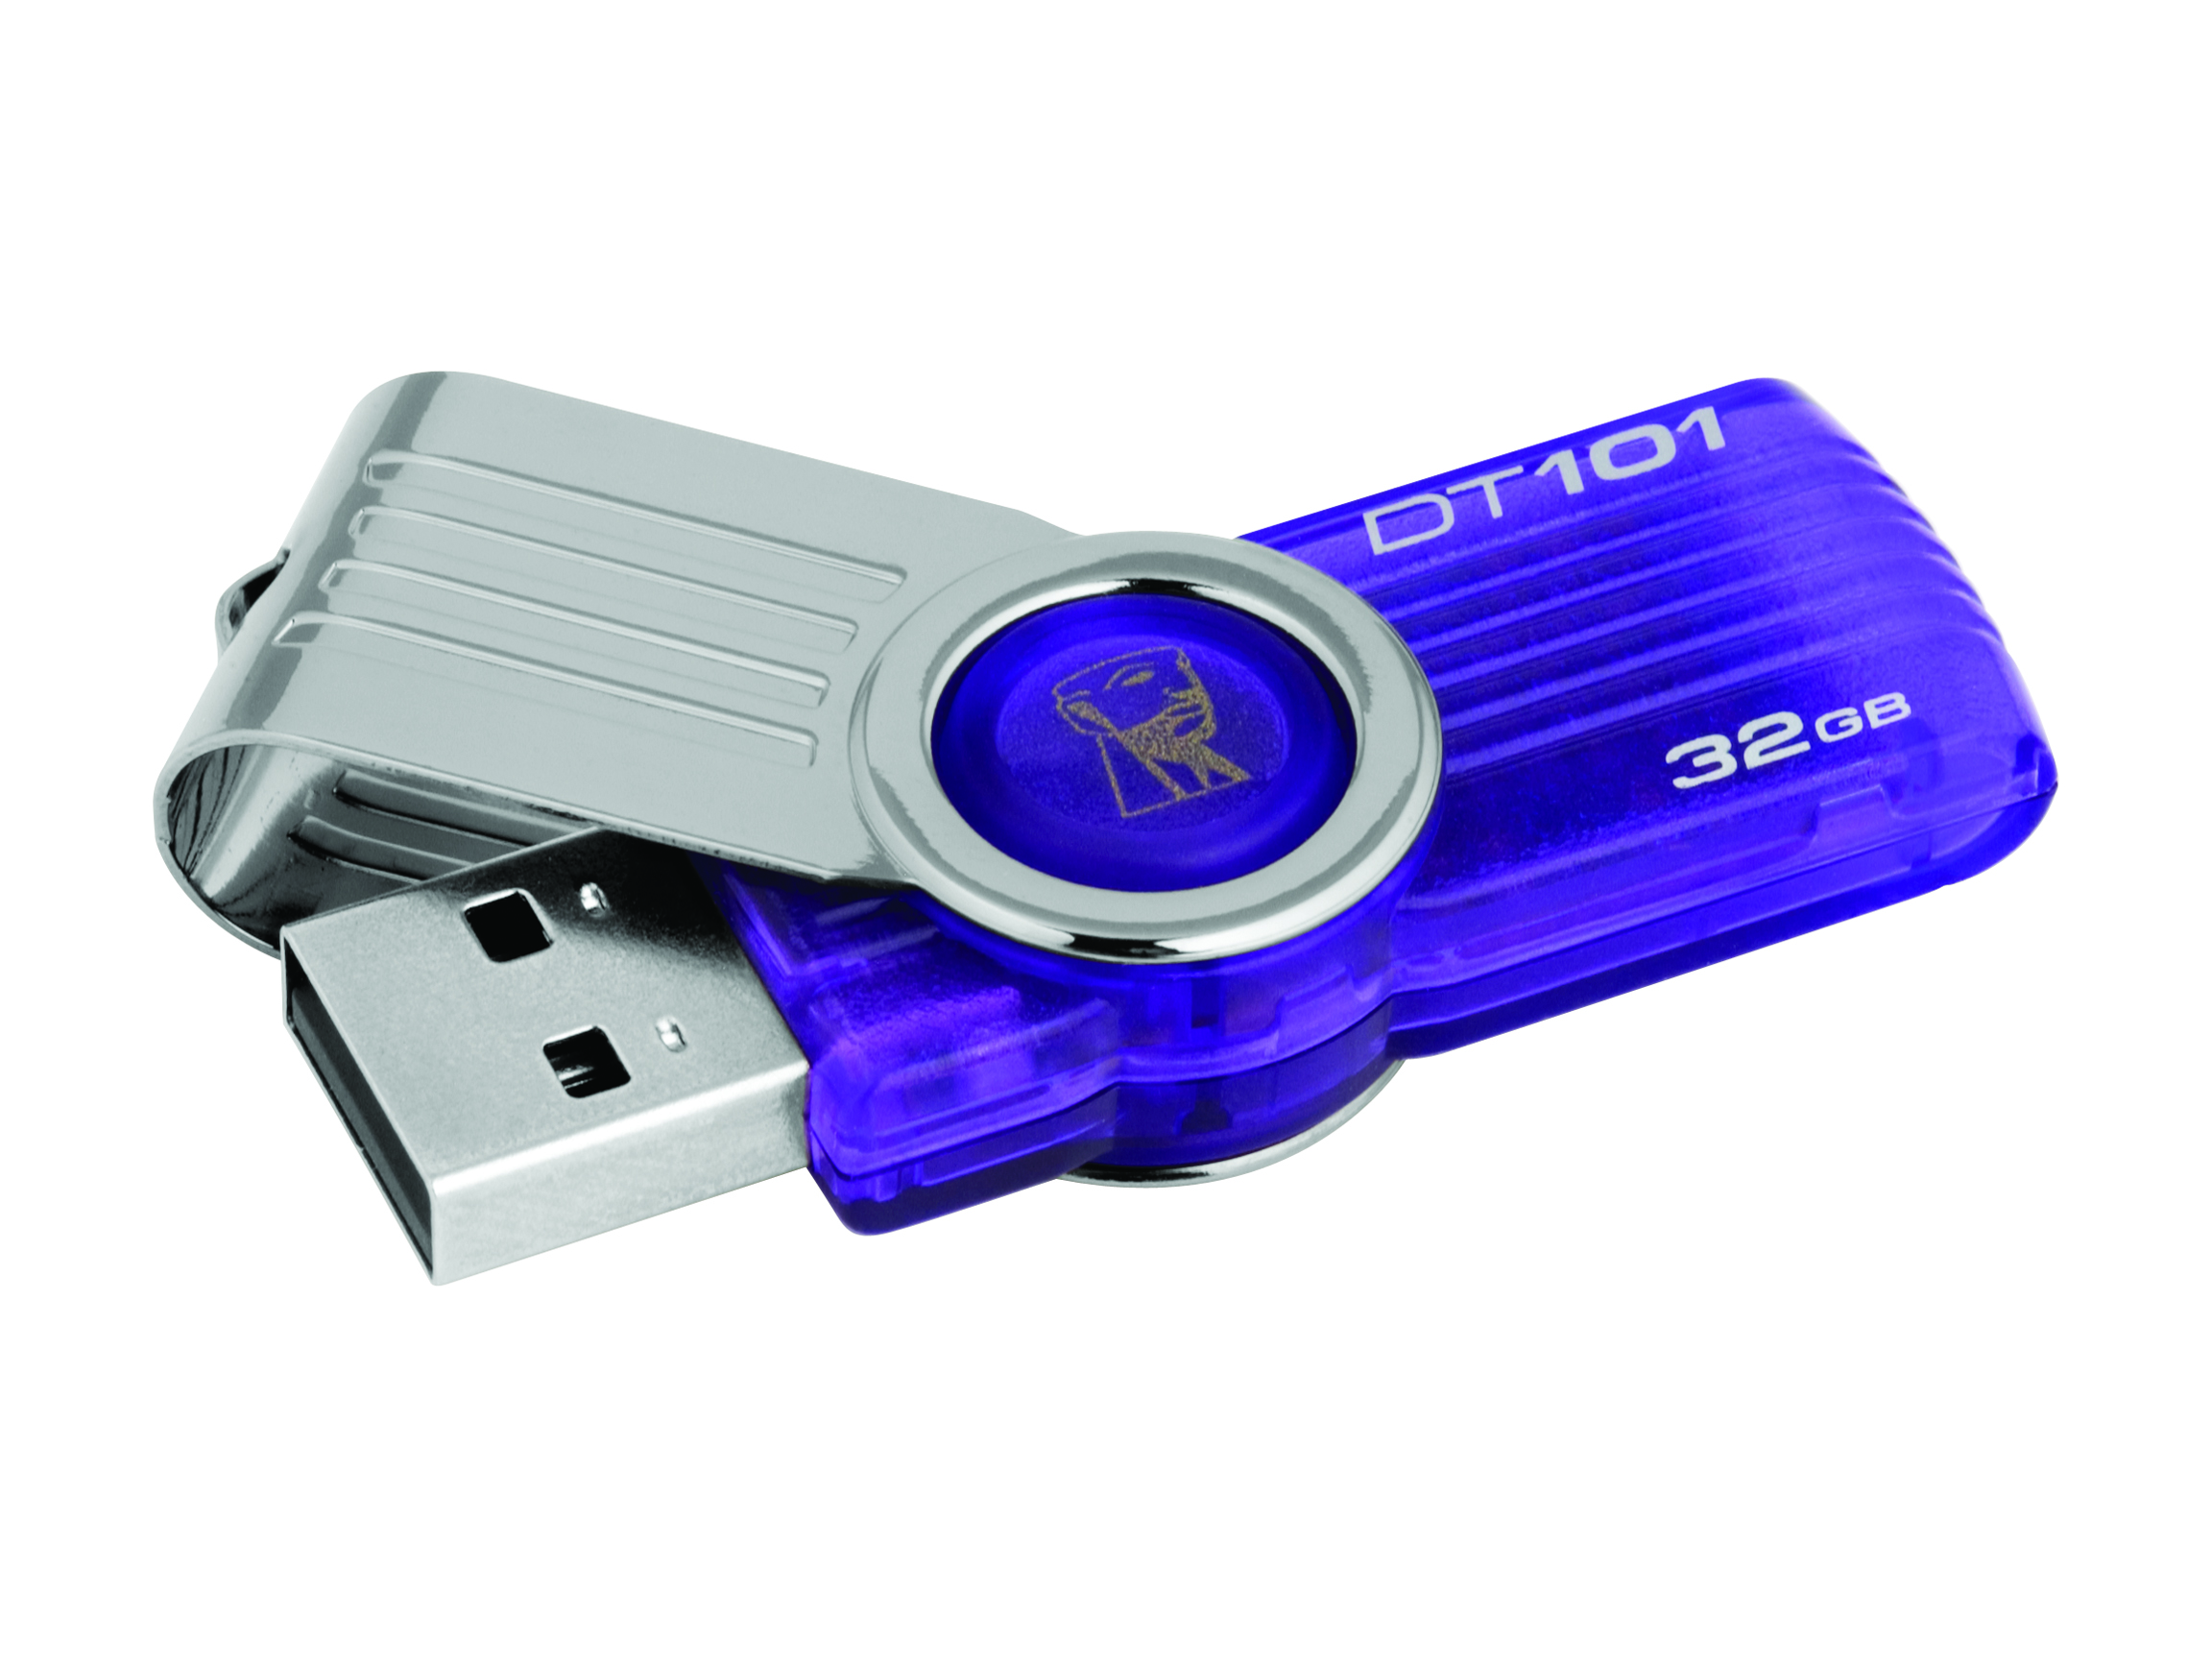 Kingston DataTraveler 101 Gen 2 32GB USB 2.0 Flash Drive (Purple) Model DT101G2/32GB